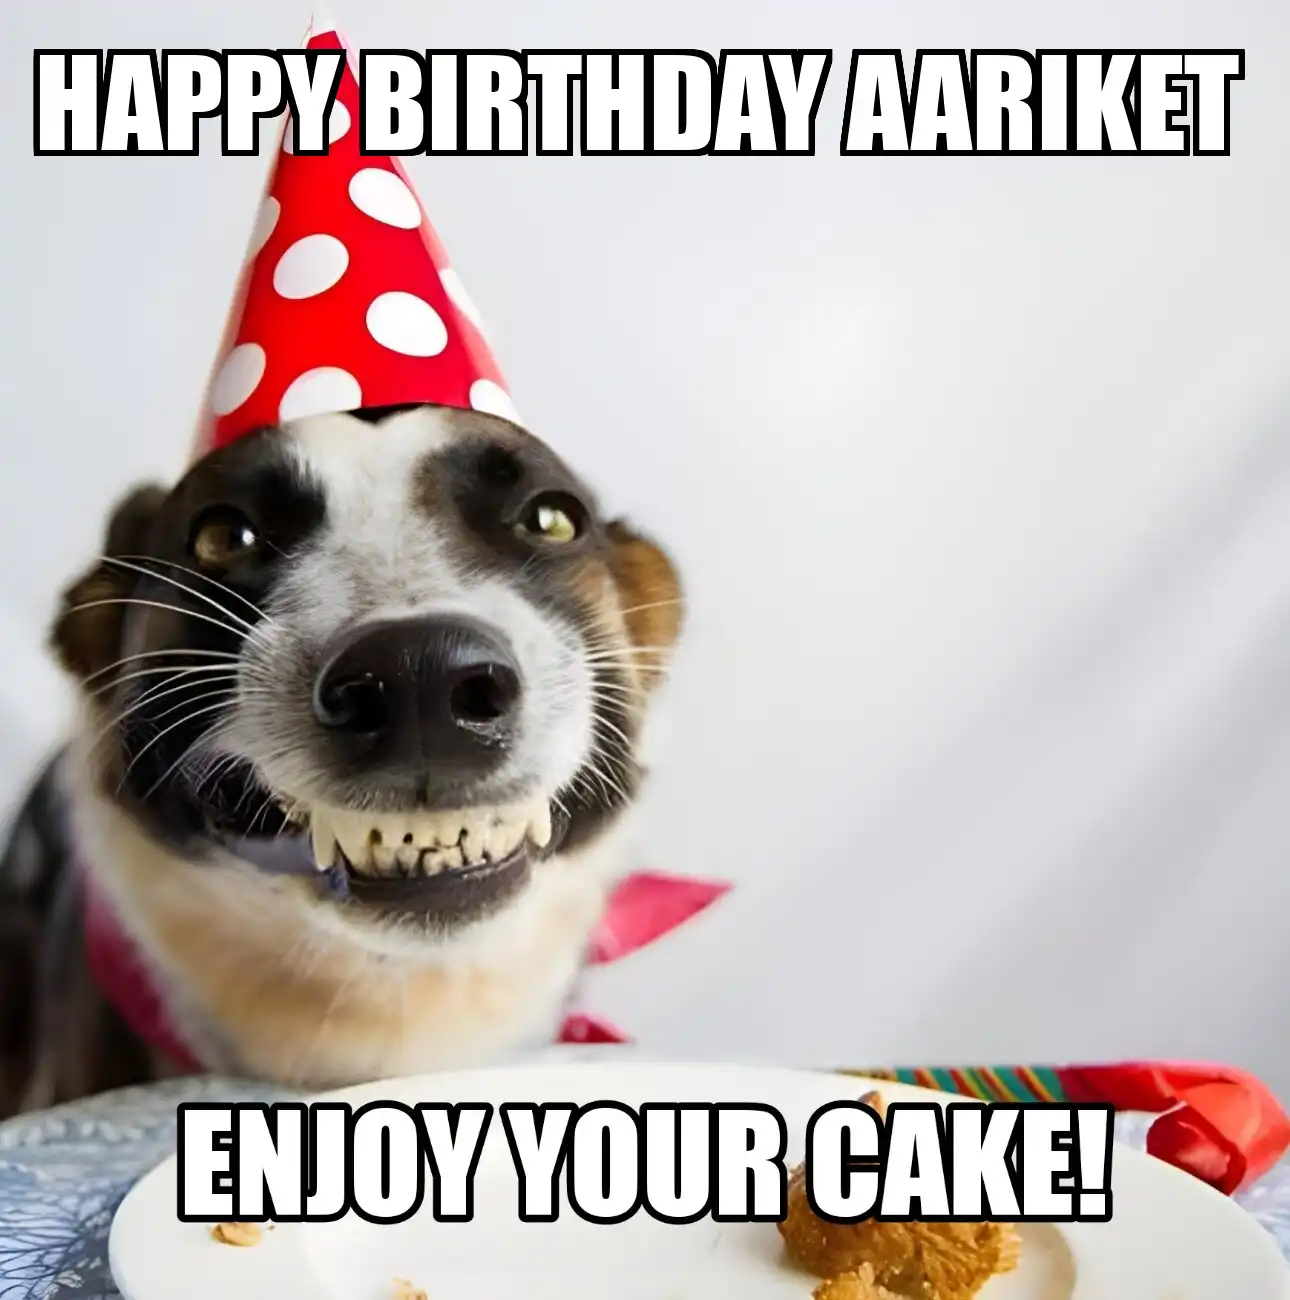 Happy Birthday Aariket Enjoy Your Cake Dog Meme